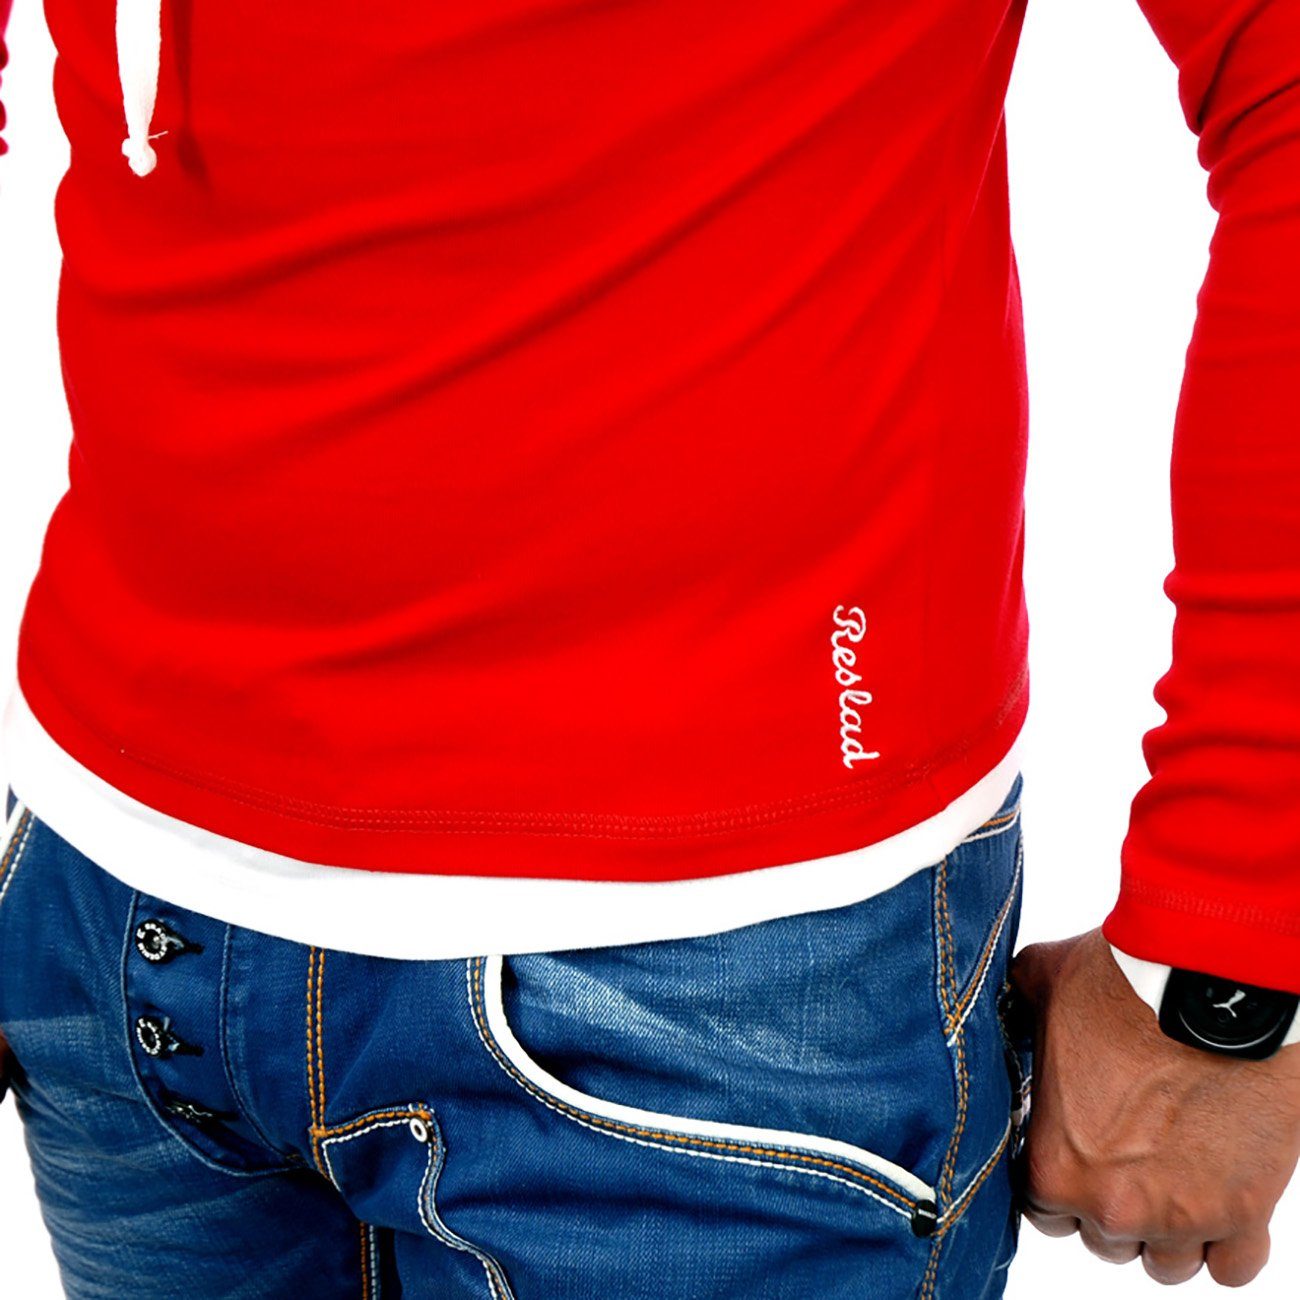 (1-tlg) RS-1003 Reslad Reslad Sweatshirt Kapuzensweatshirt Kapuzen Sweatshirt rot-weiß Layer-Look Herren